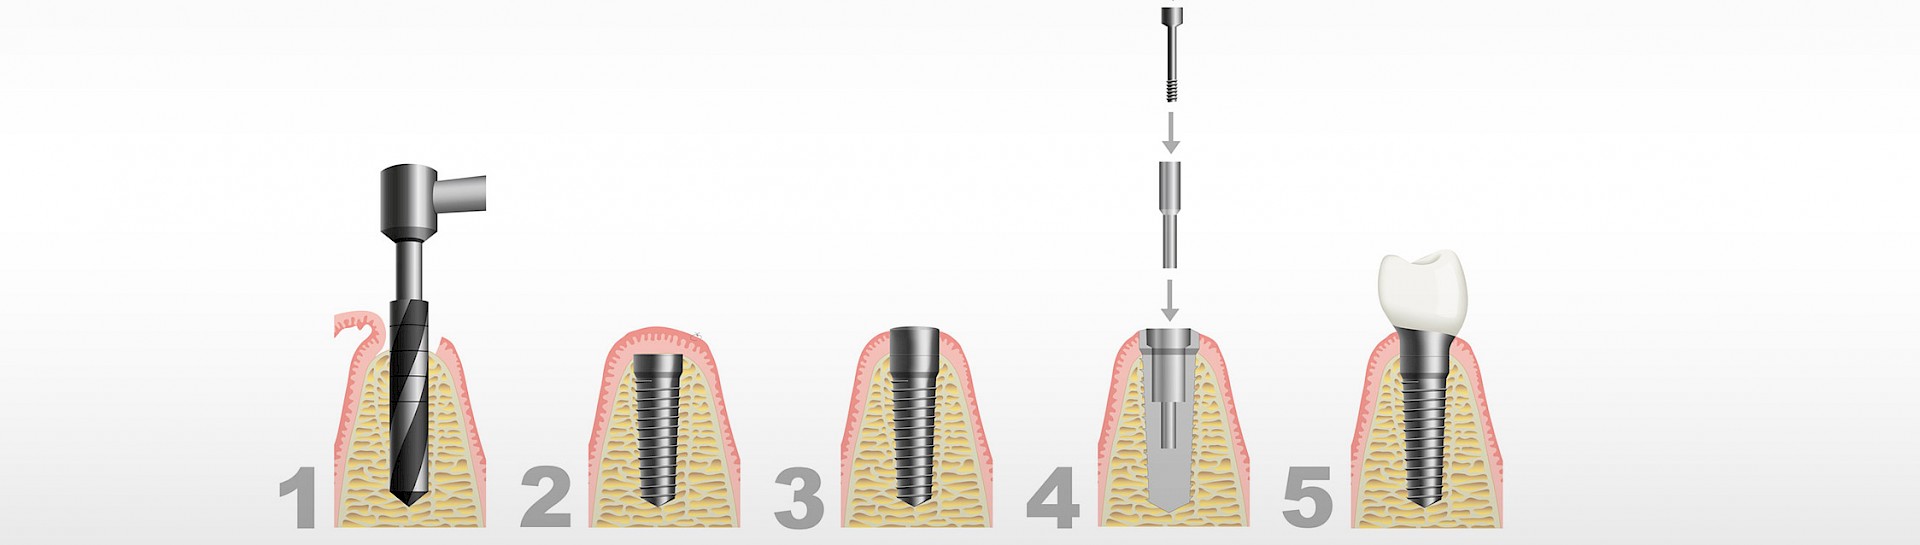 Zahnarztpraxis Wostratzky Implantate